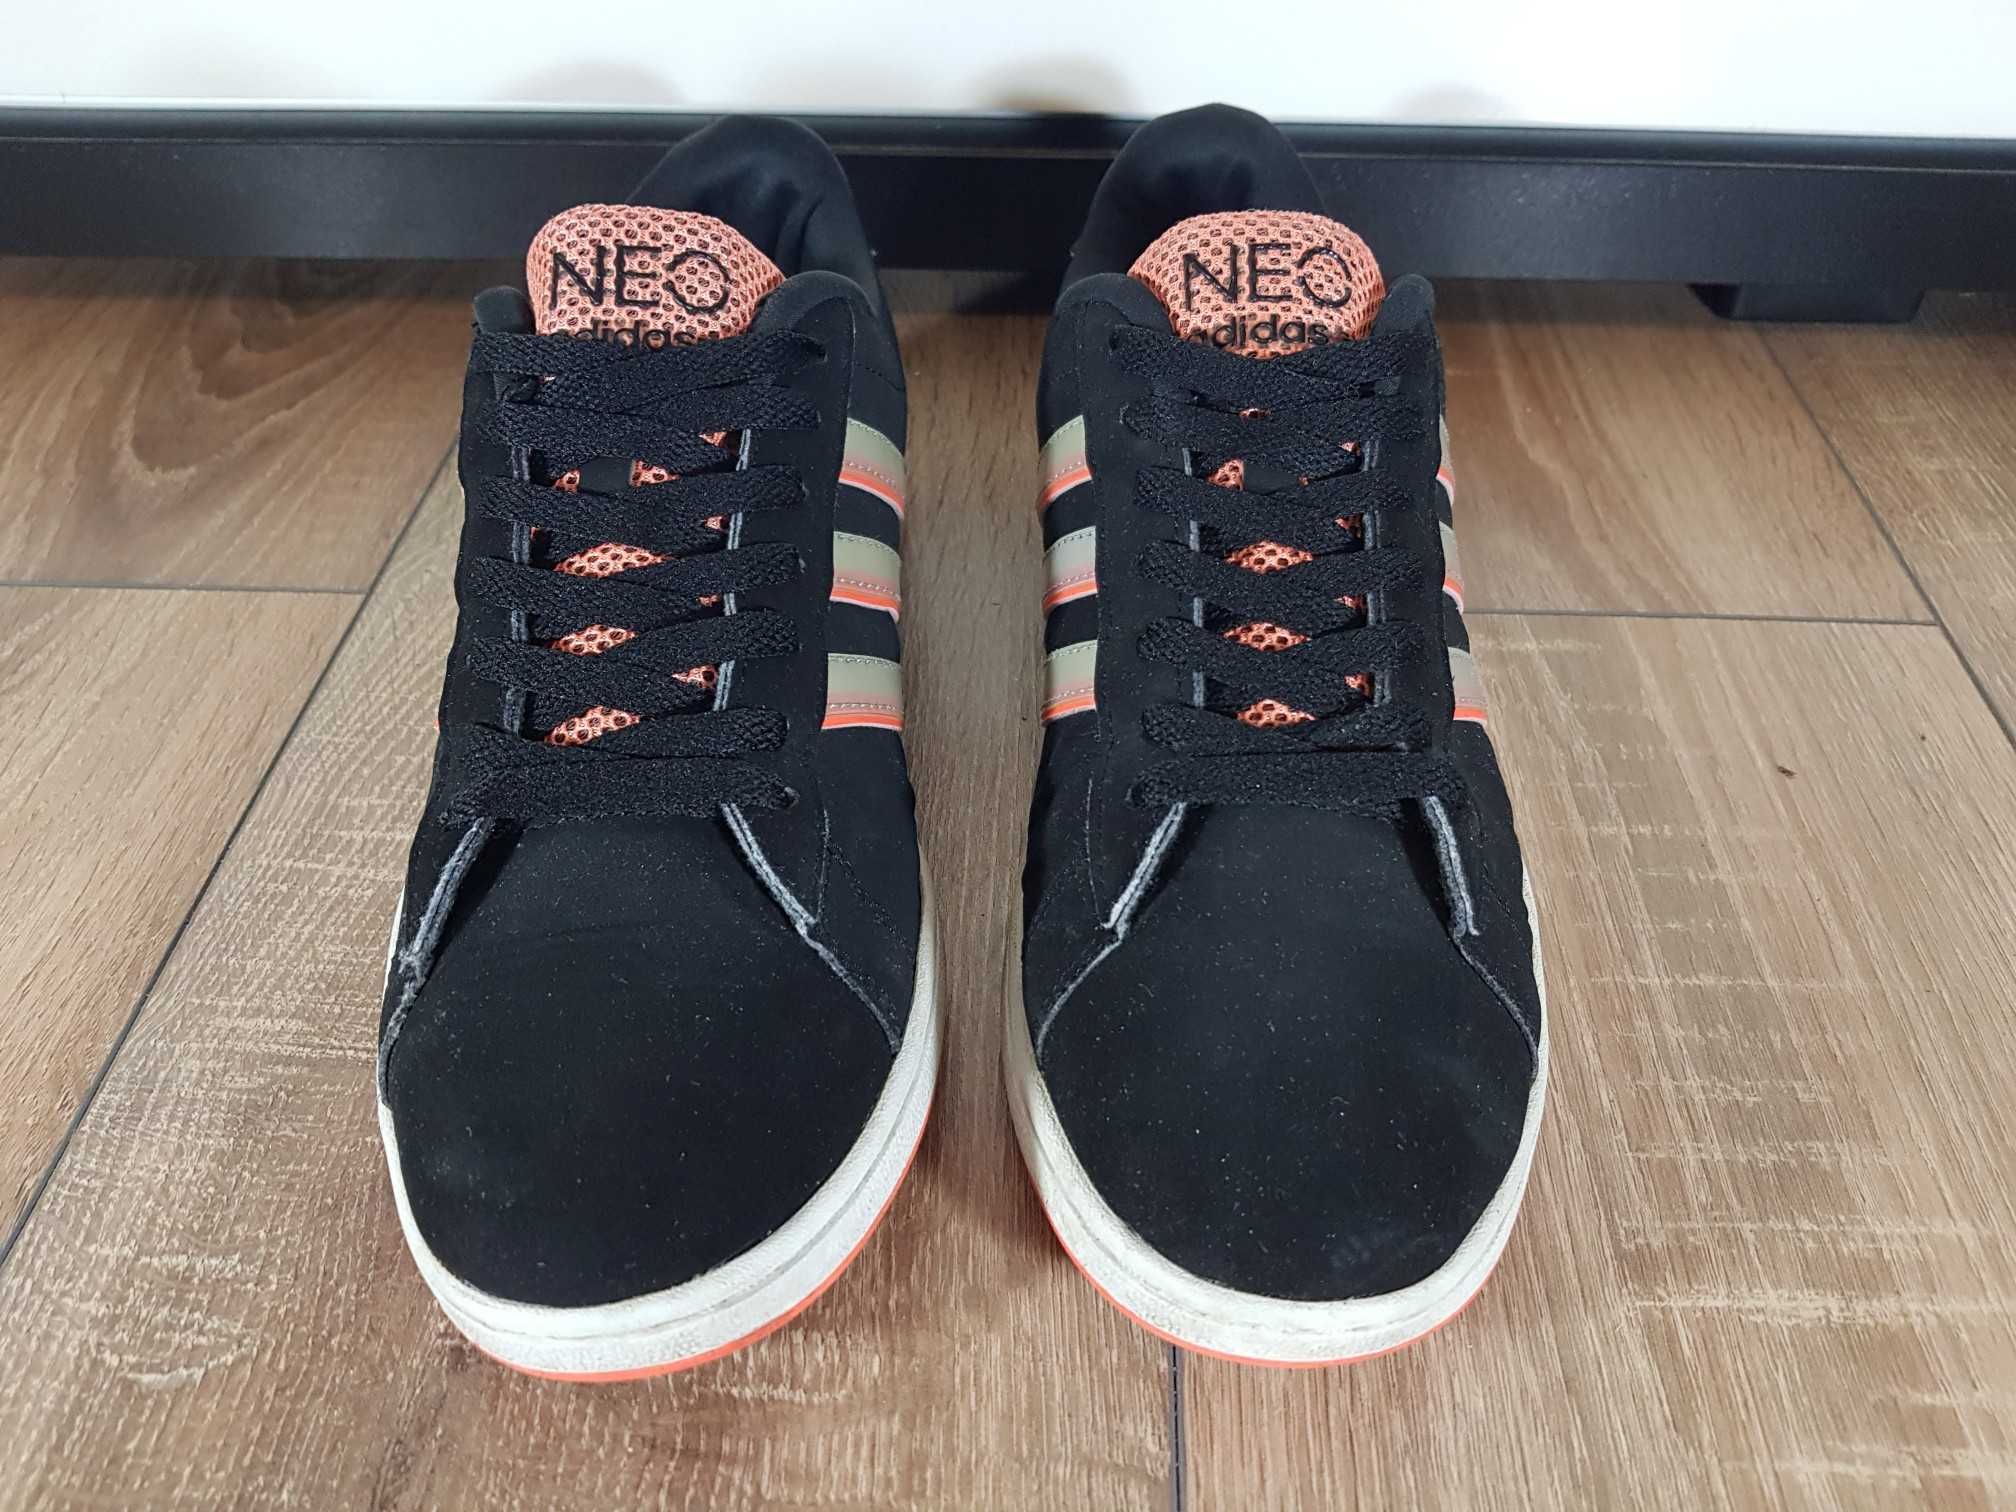 Adidași Adidas Neo Label Negru & Portocaliu Bărbați-42